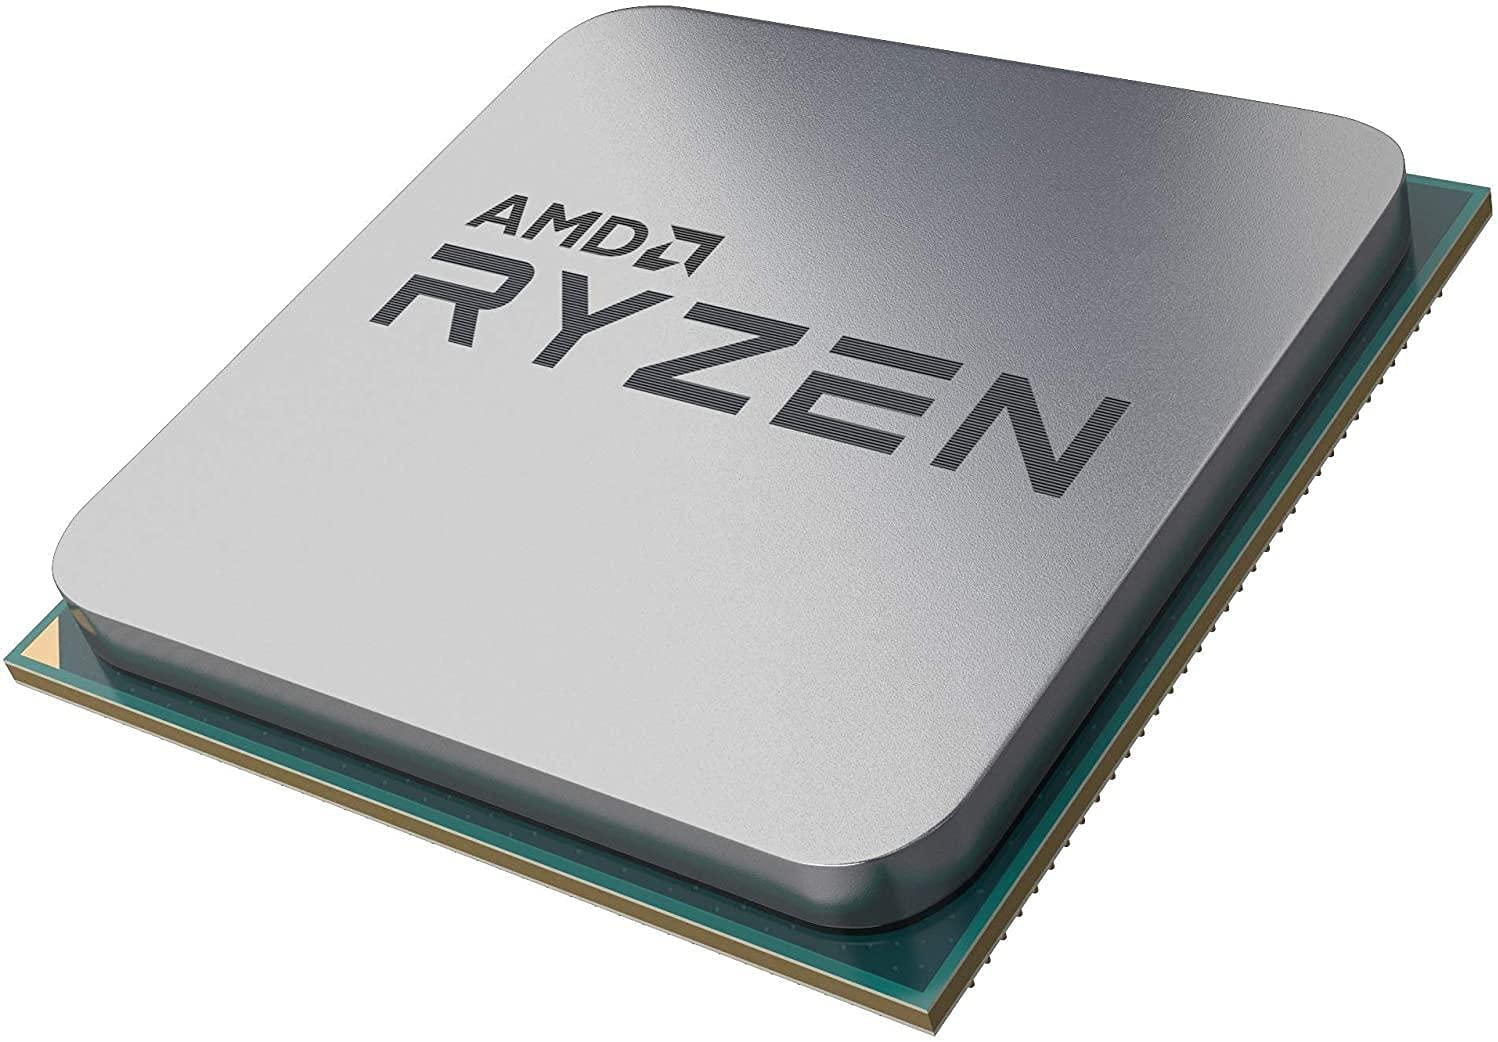 AMD RYZEN 5 PRO 4650G MPK 6 CORES 12 THREADS DESKTOP PROCESSOR